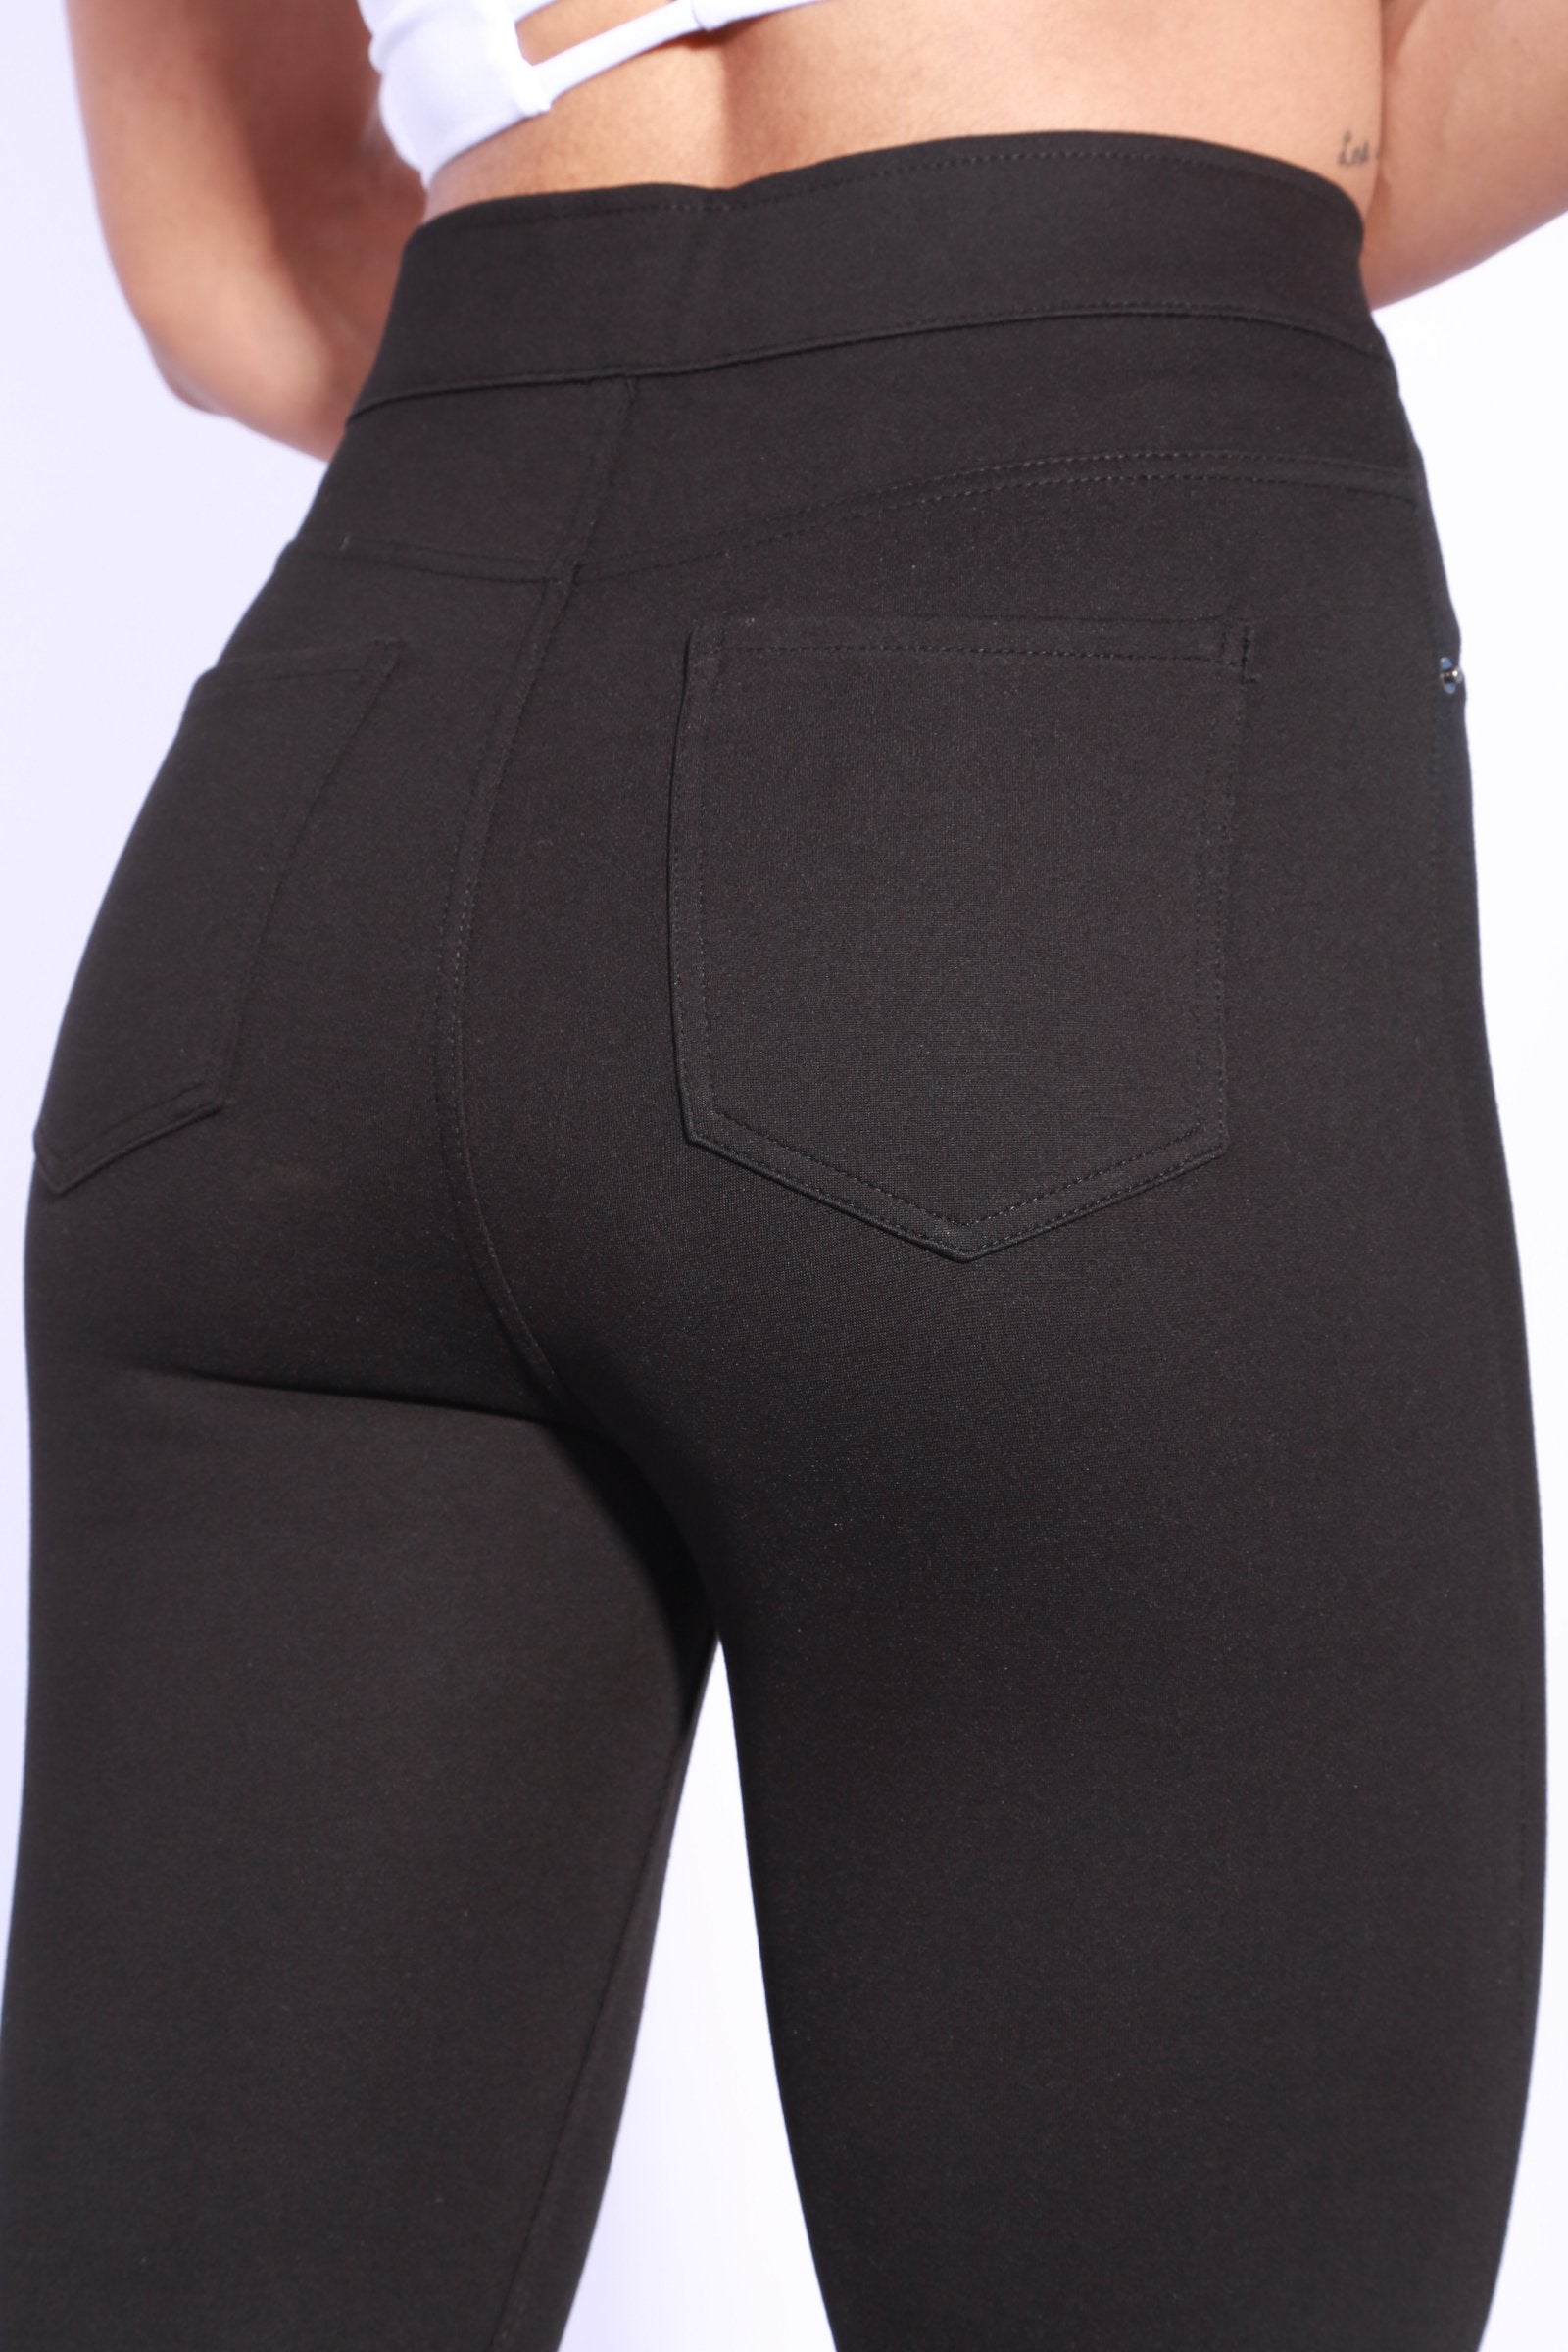 Image of SNUGZ Perfect pants